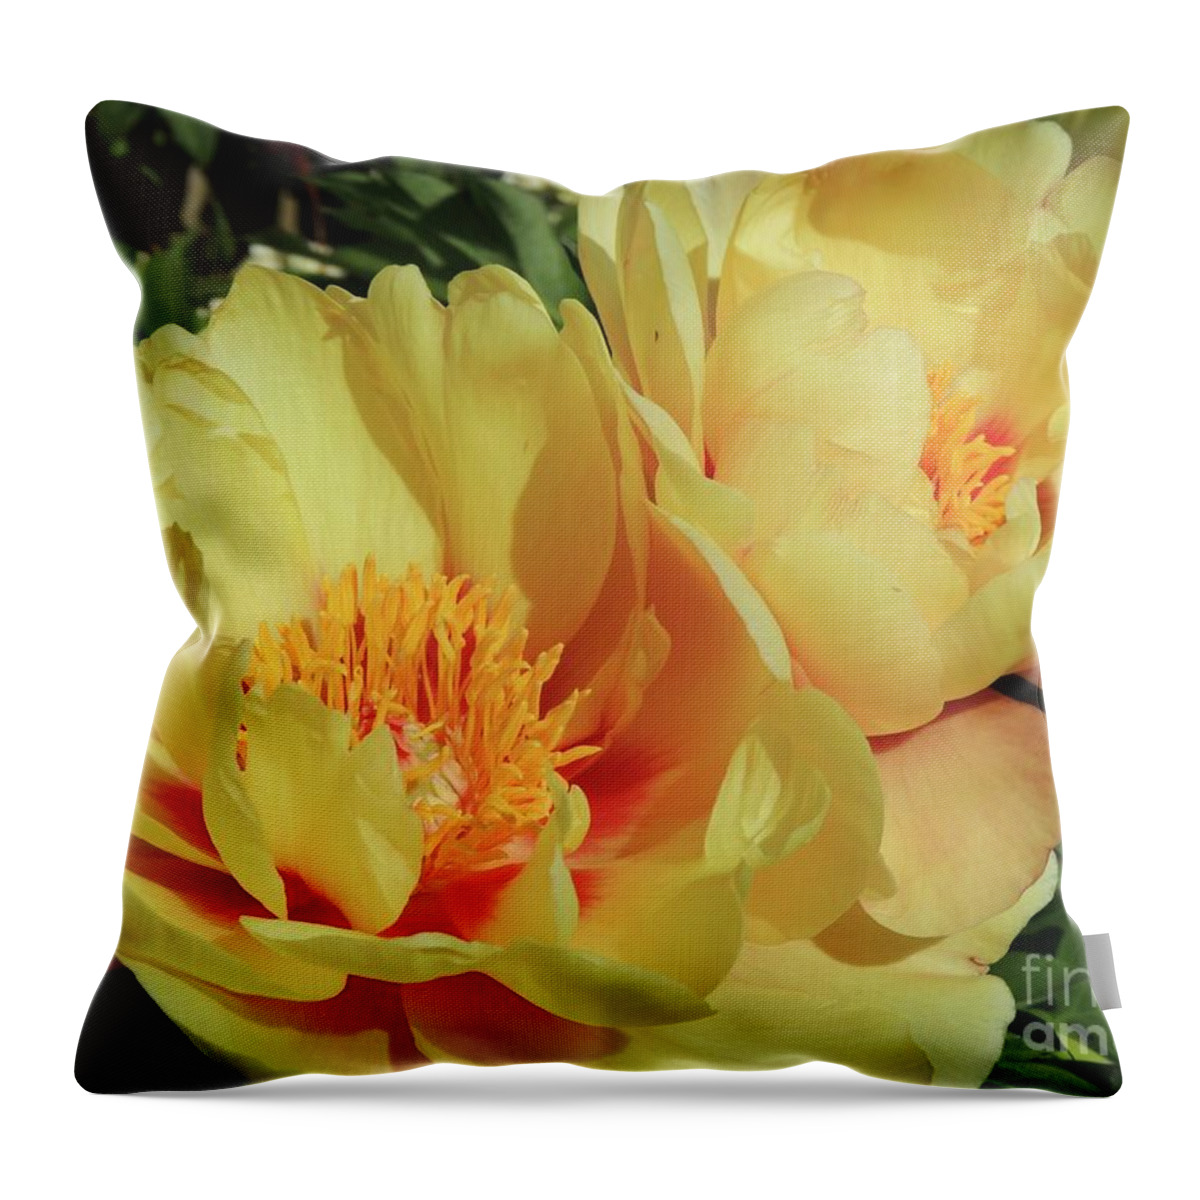 Flower Throw Pillow featuring the photograph Peach Peonies by Julie Rauscher